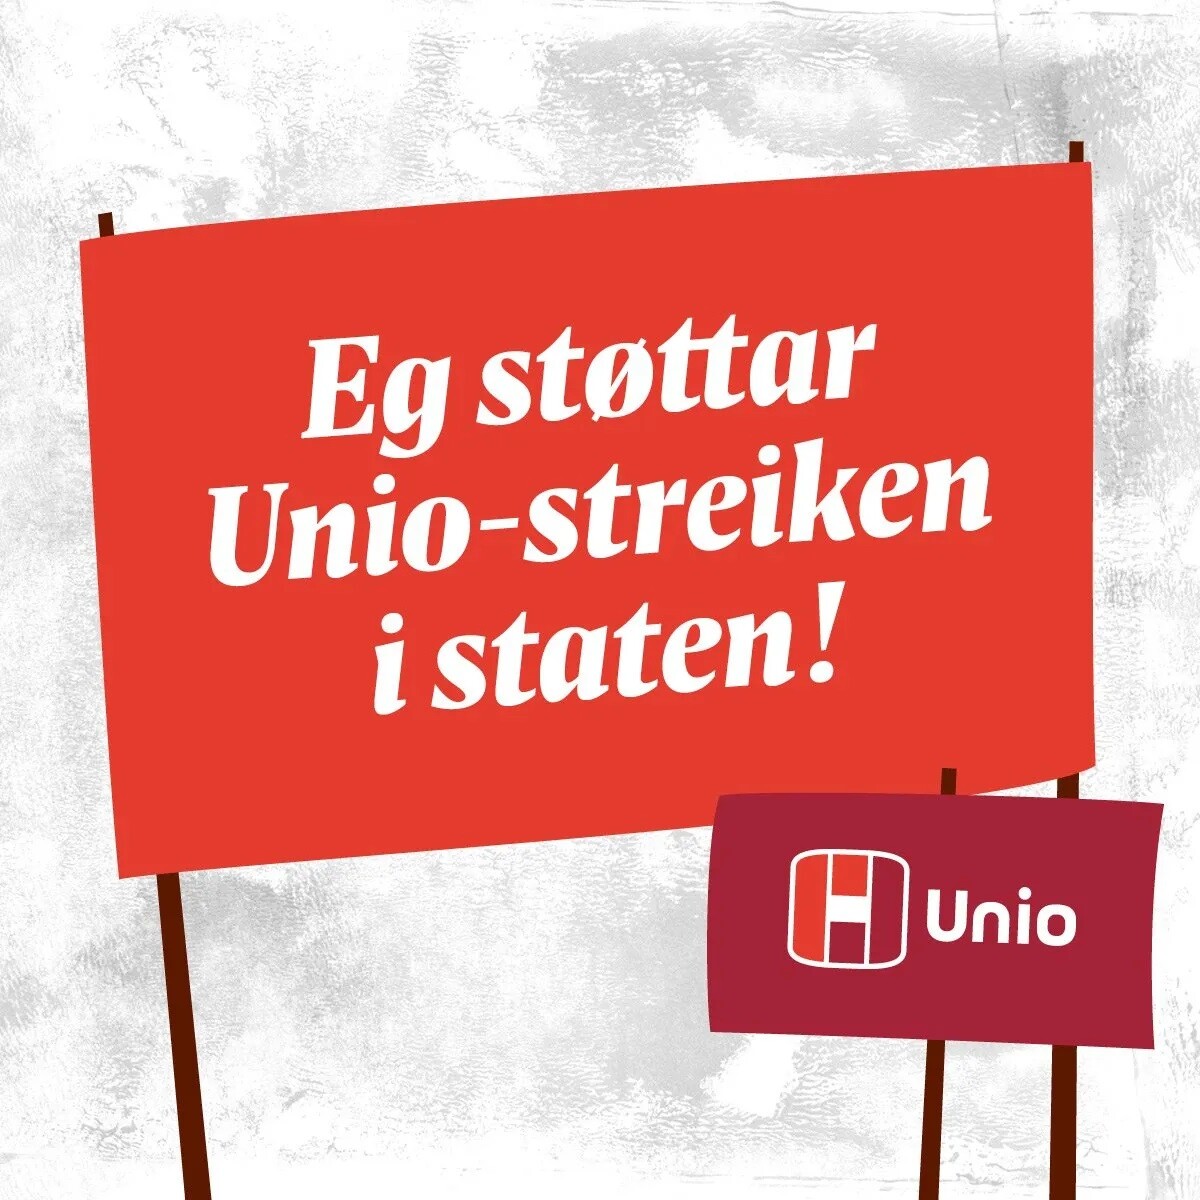 Eg støttar Unio-streiken i staten kvadrat